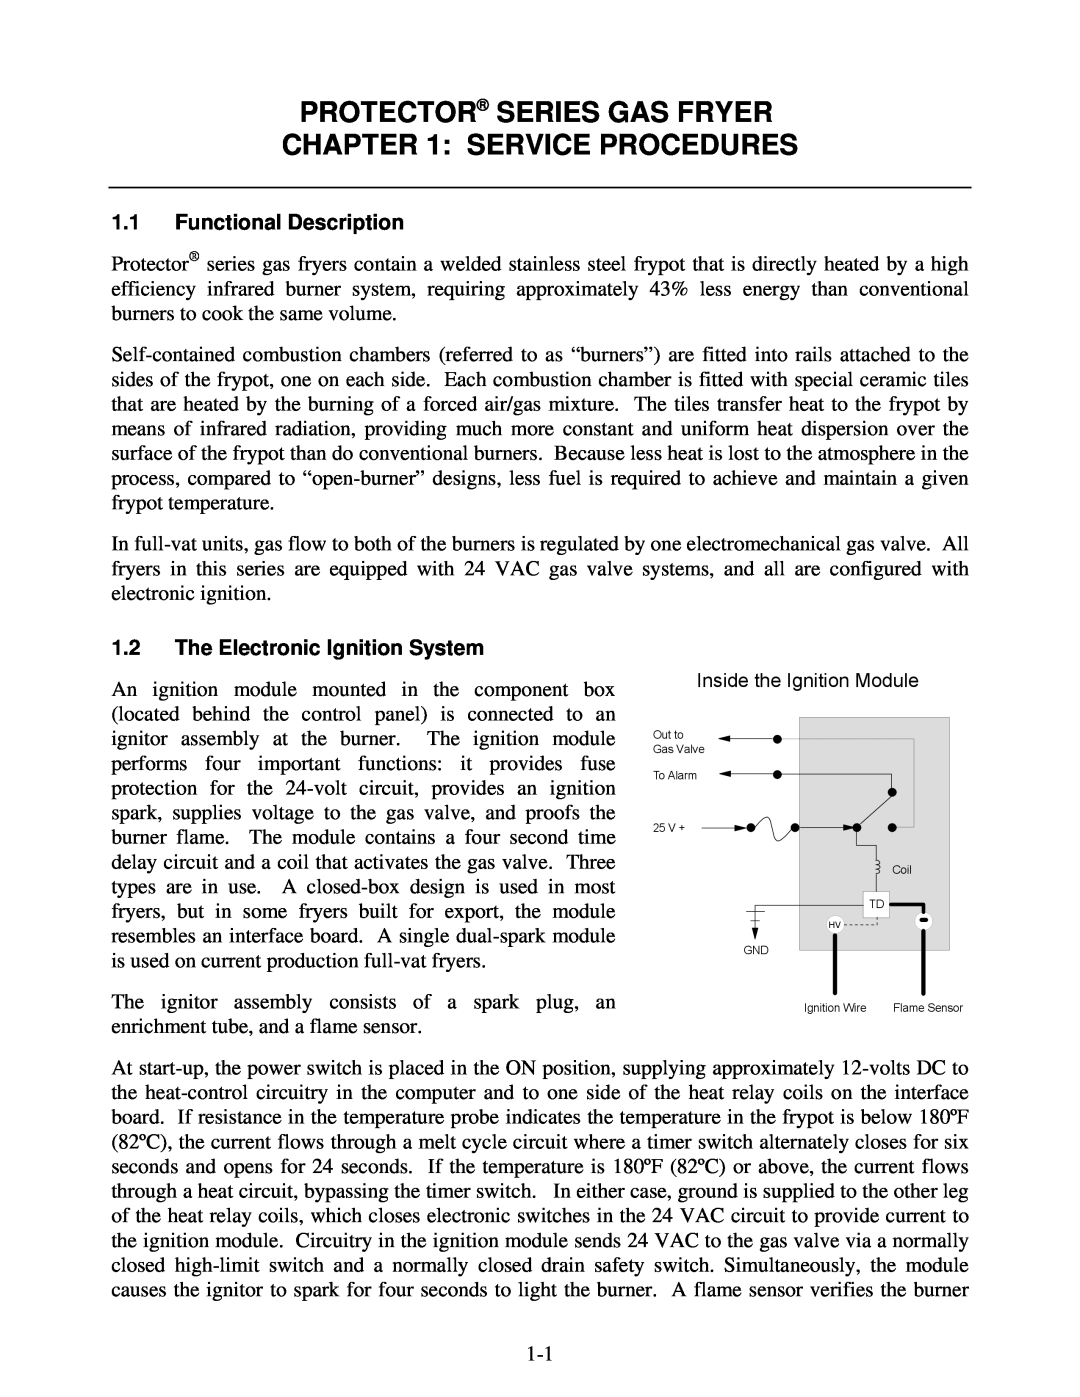 Frymaster 8196345 manual Protector Series Gas Fryer, Service Procedures, 1.1Functional Description 